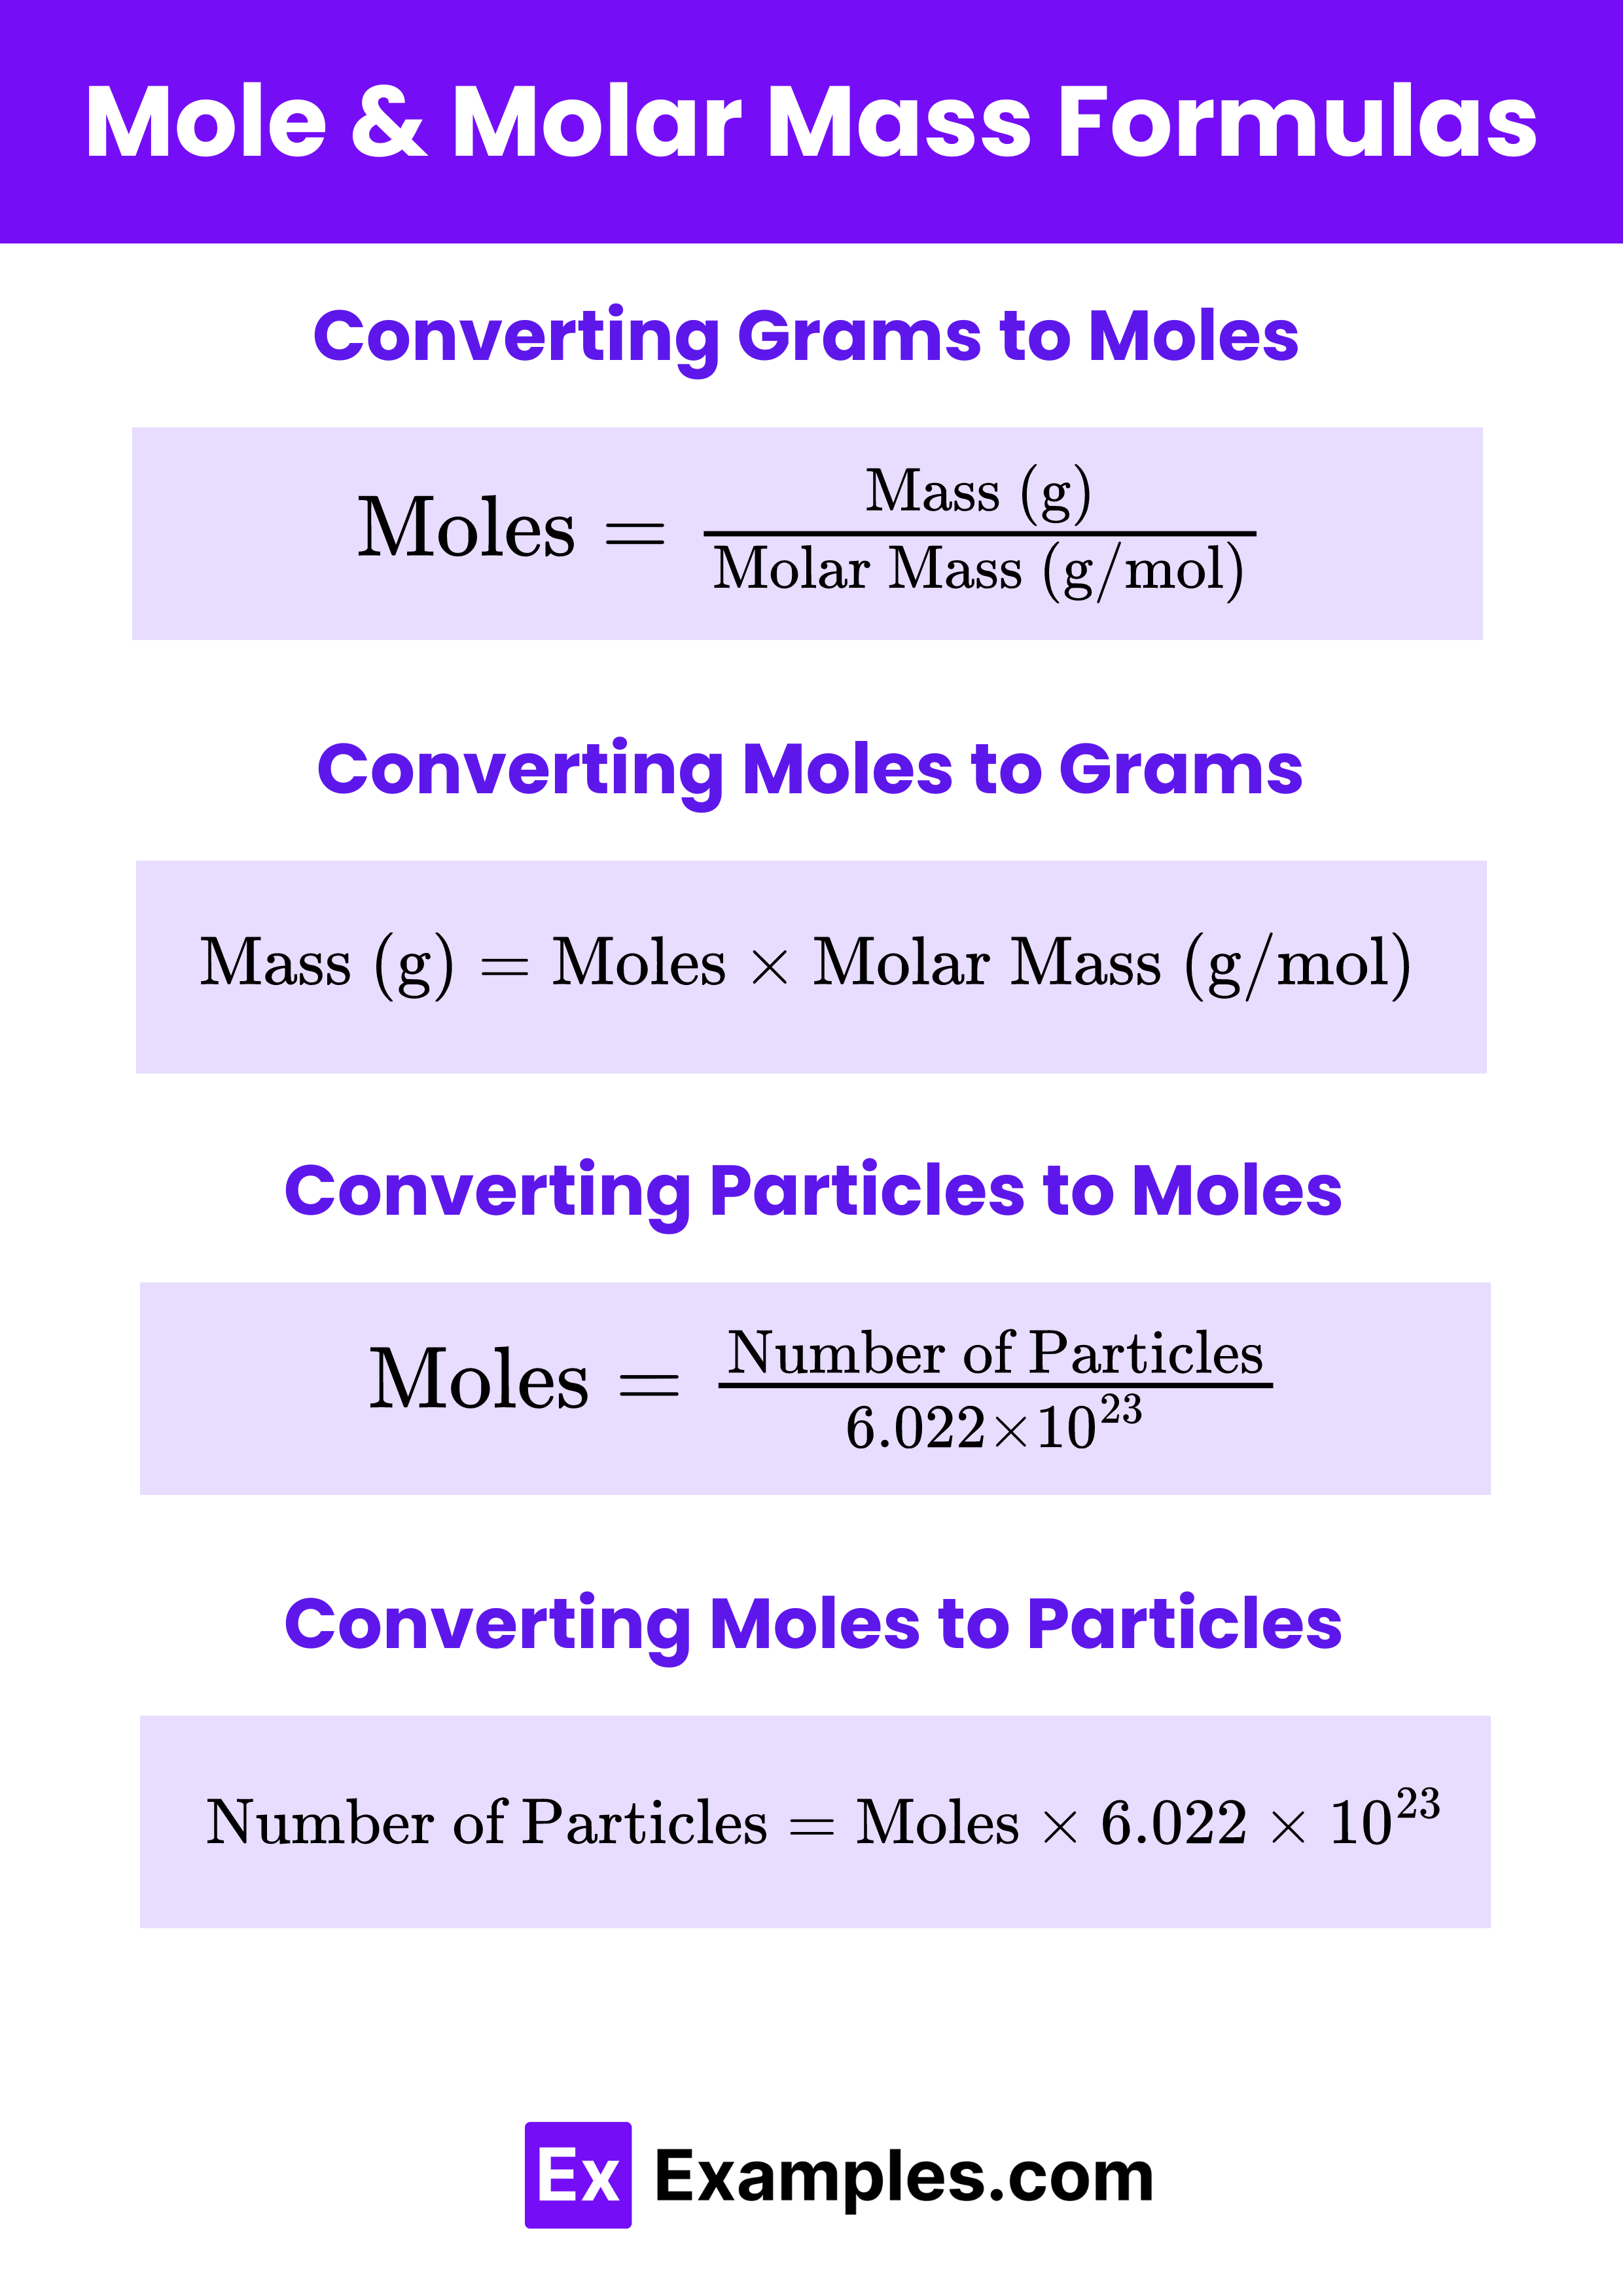 Mole & Molar Mass Formulas